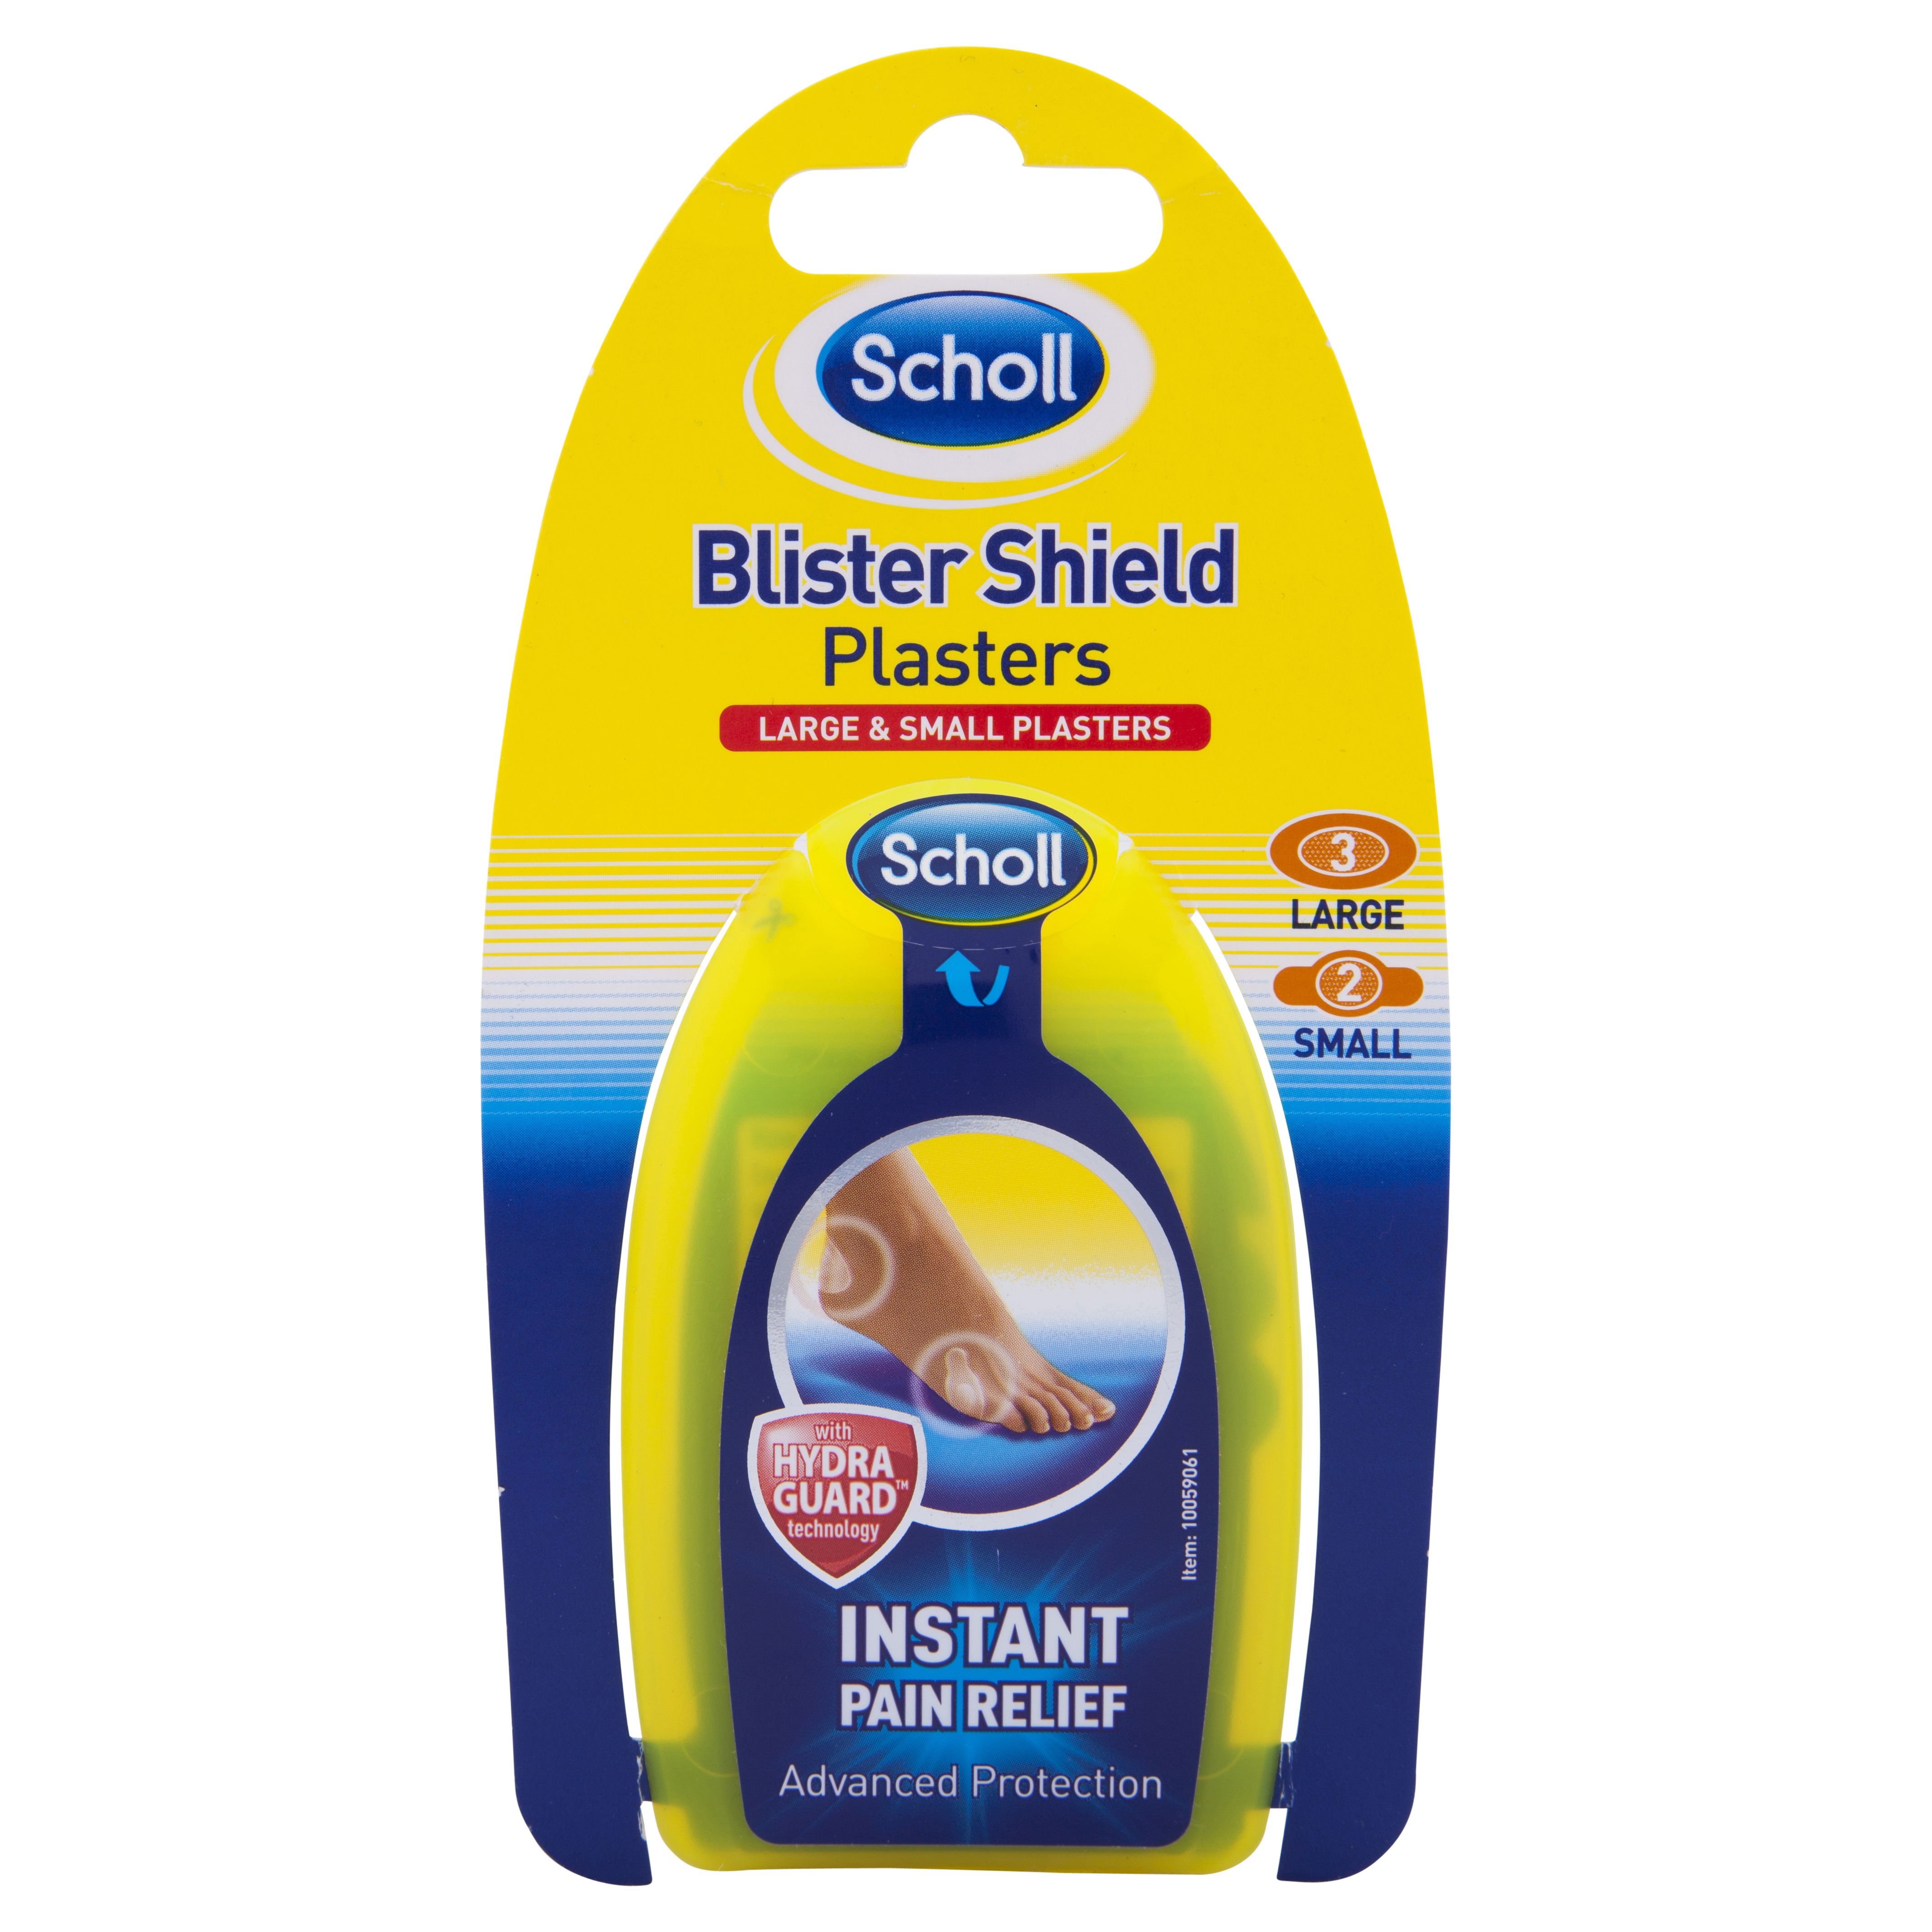 Blister Shield Plasters | Scholl AU